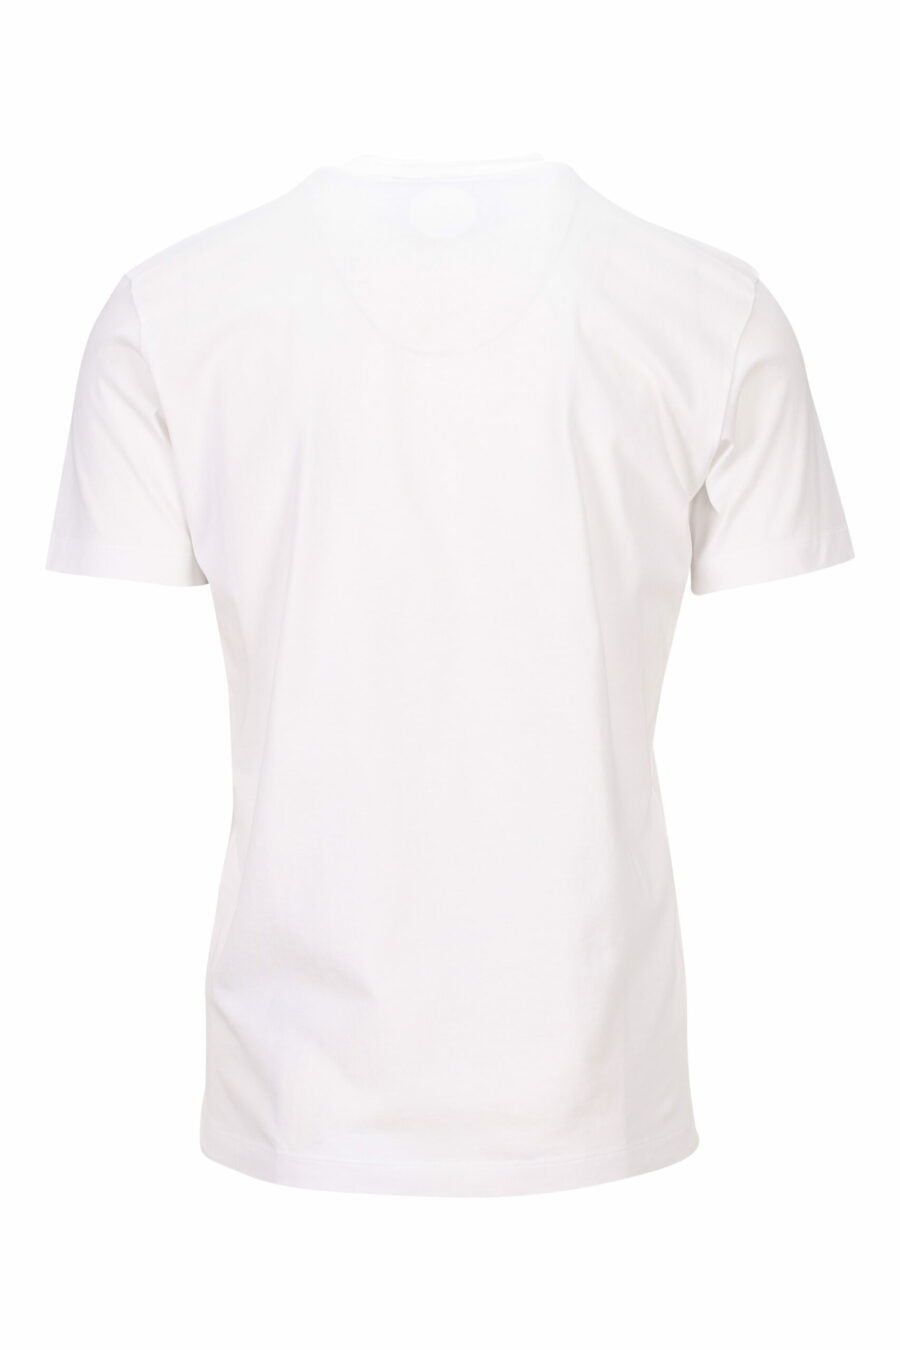 Camiseta blanca con minilogo "ceresio 9, milano" - 8054148505059 1 scaled